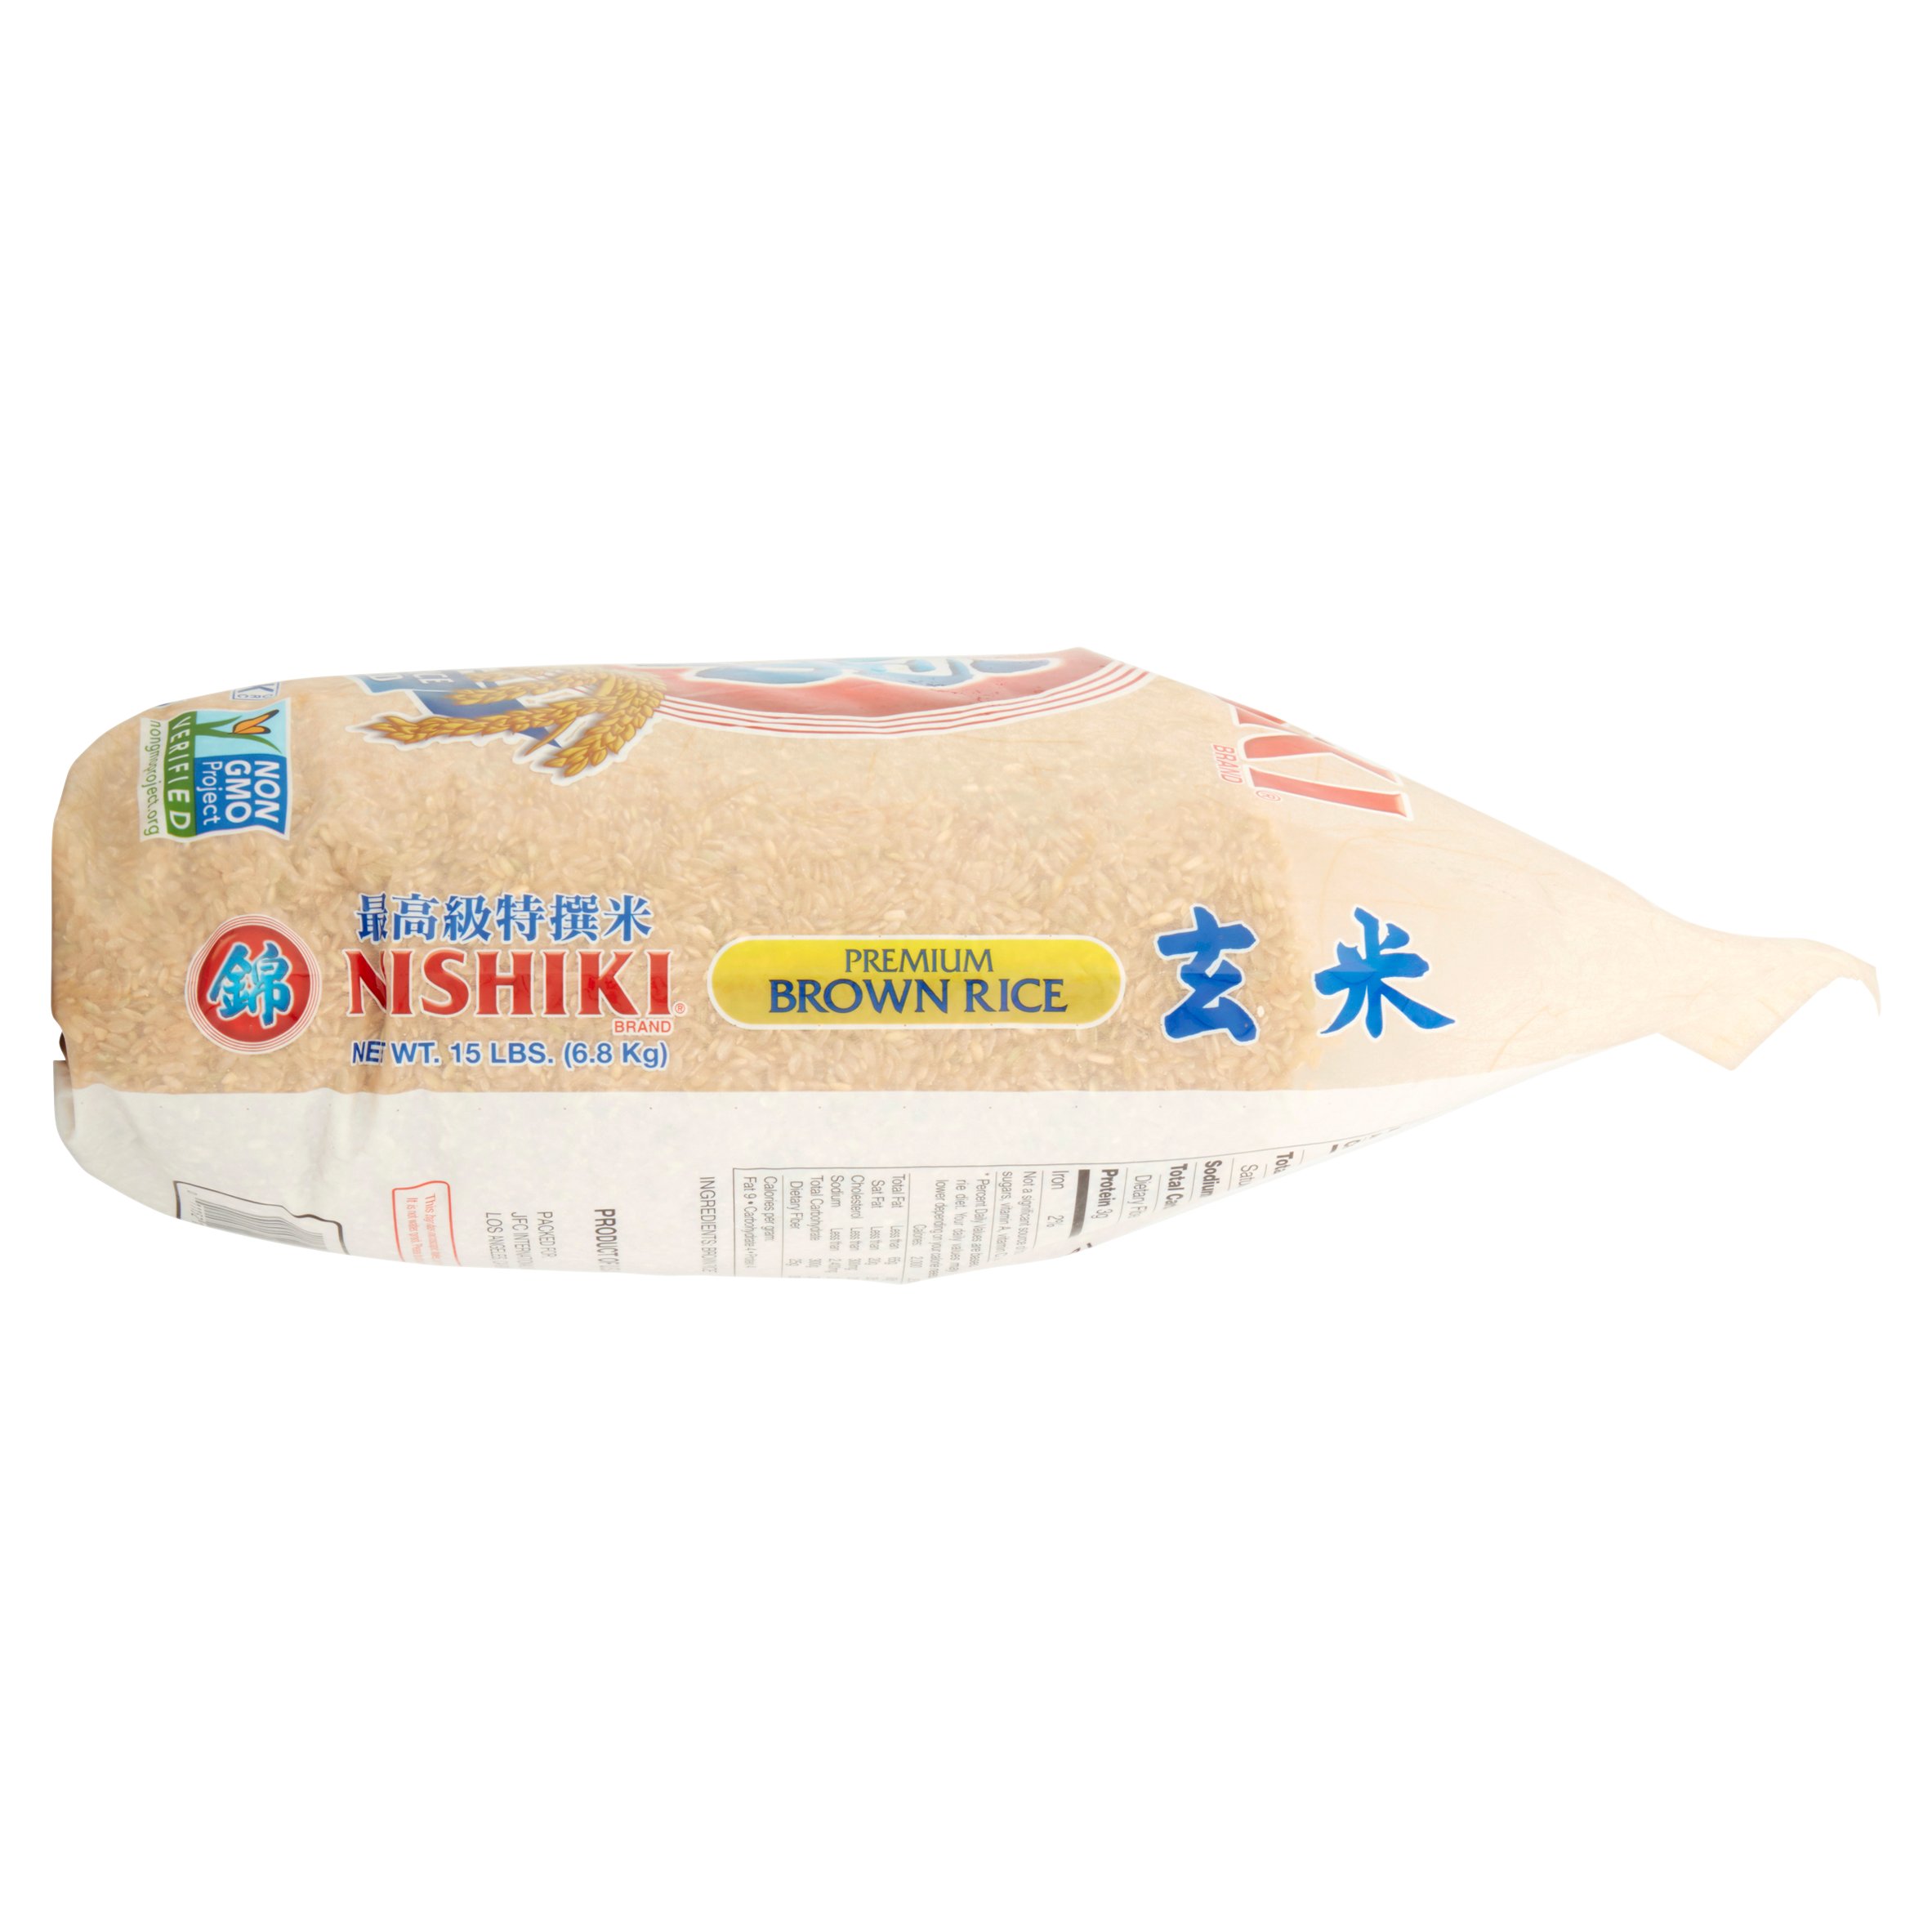 Nishiki Premium Brown Rice, 15 lb - image 5 of 5